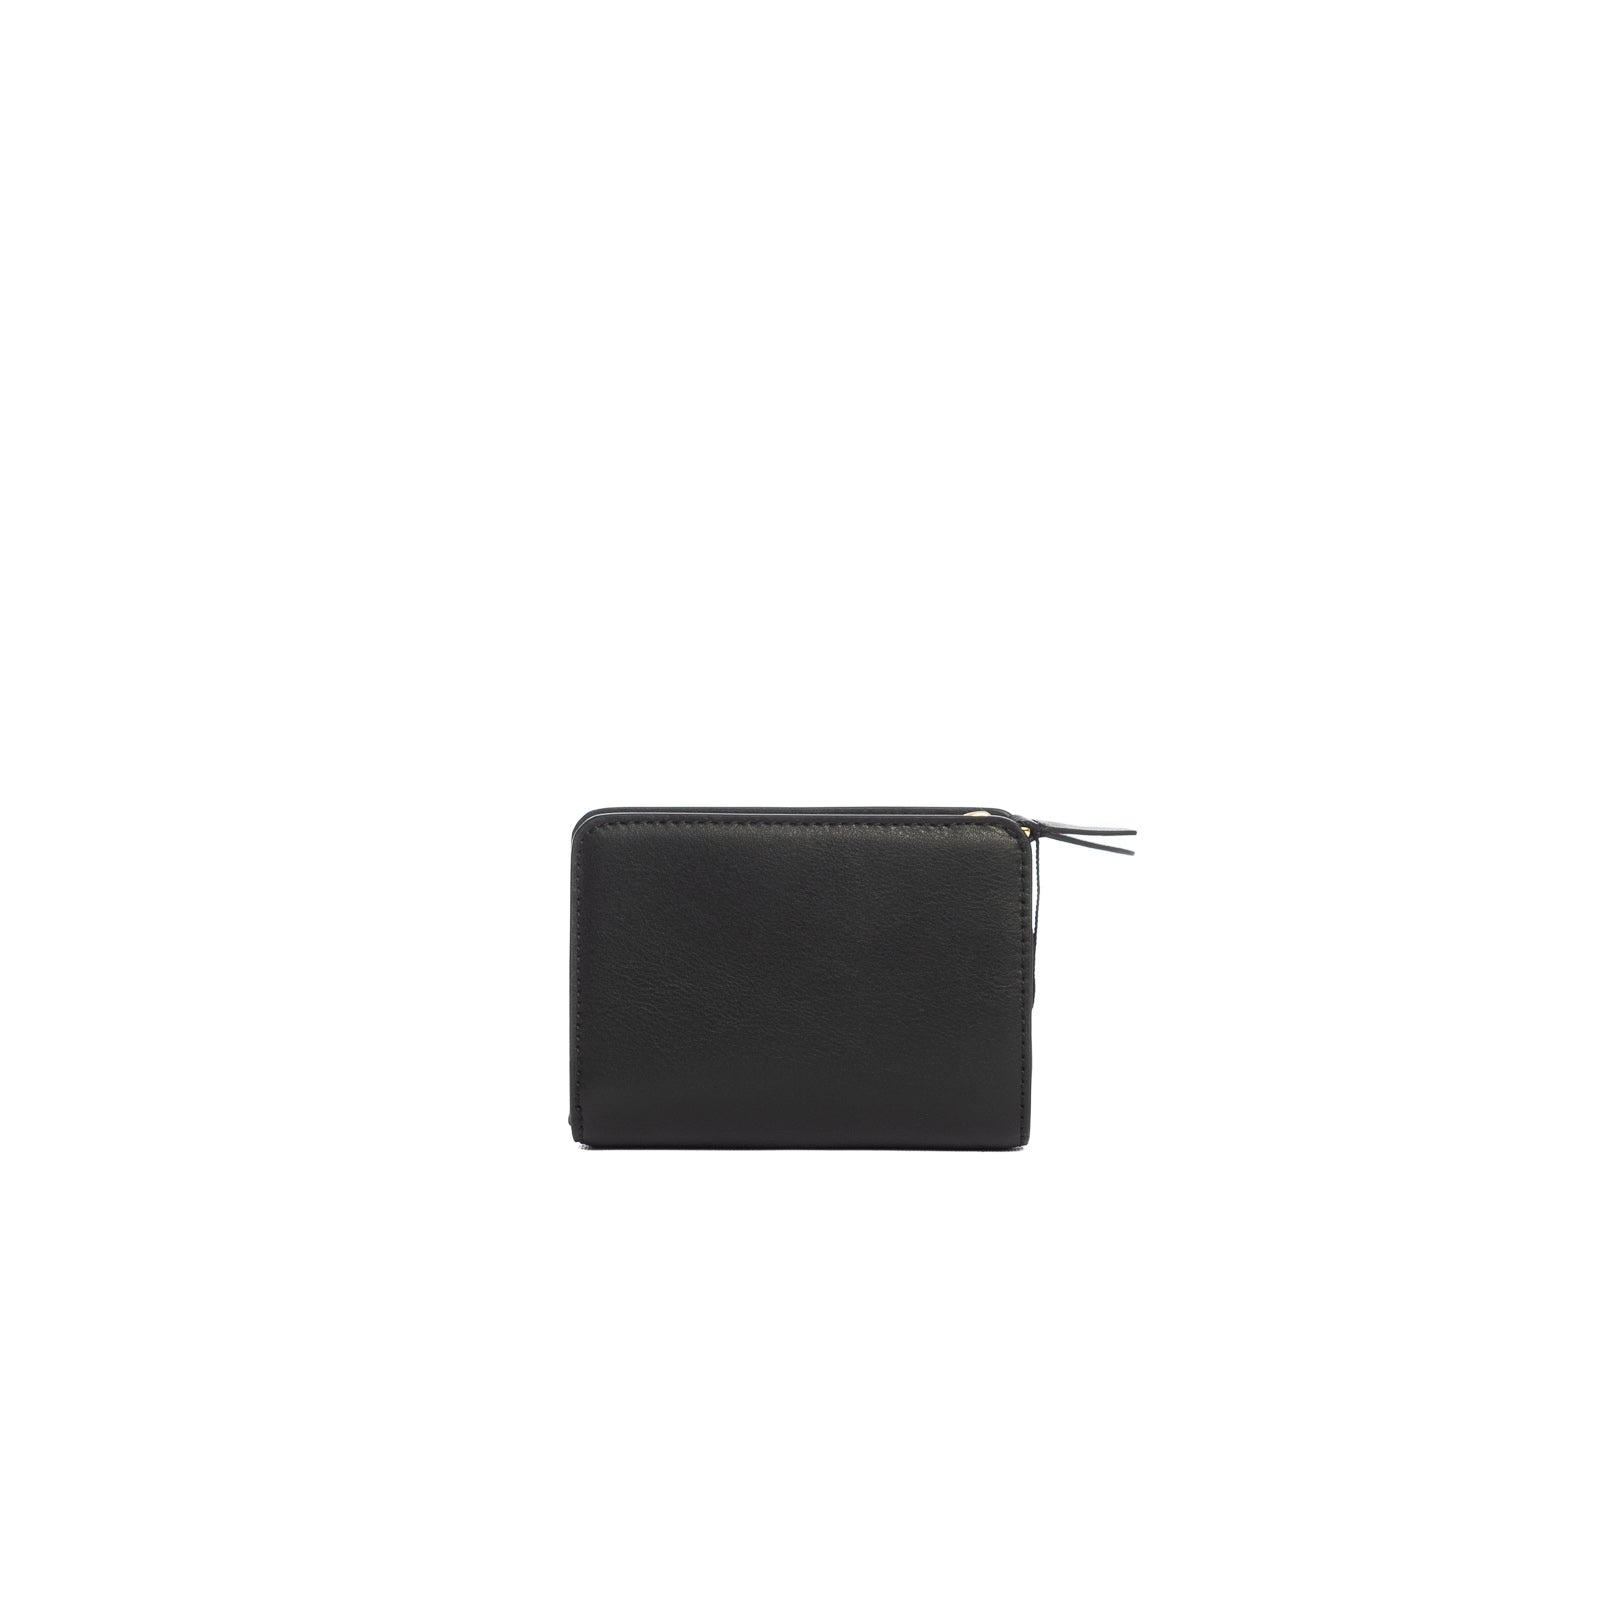 Portafoglio MARC JACOBS Mini compact wallet
Nero